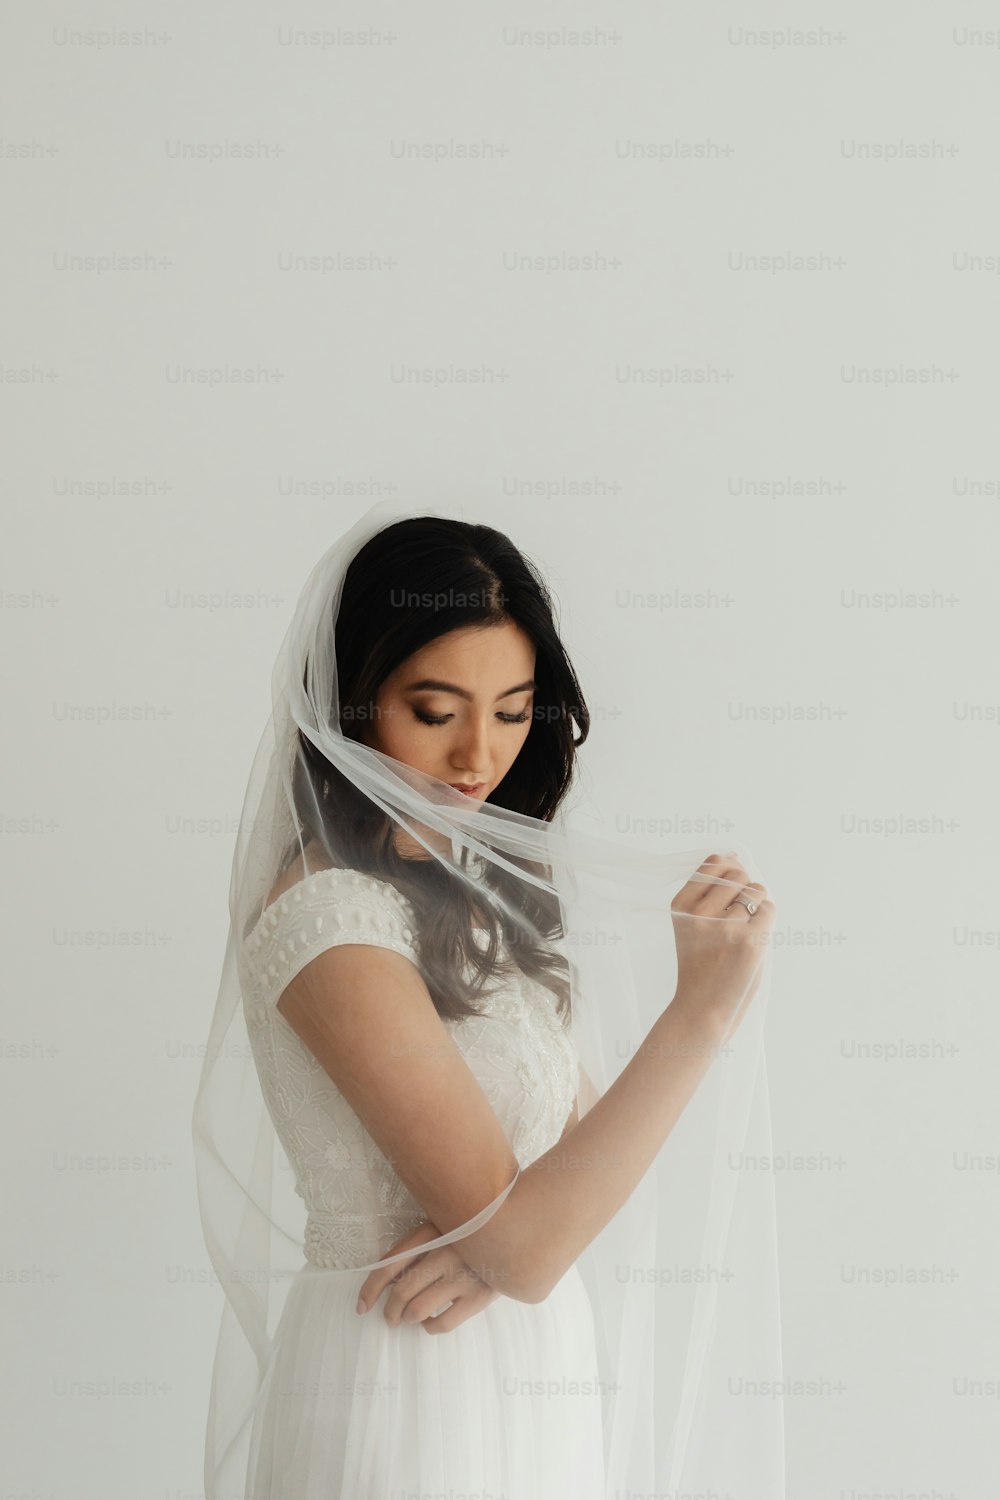 a woman wearing a veil and a wedding dress